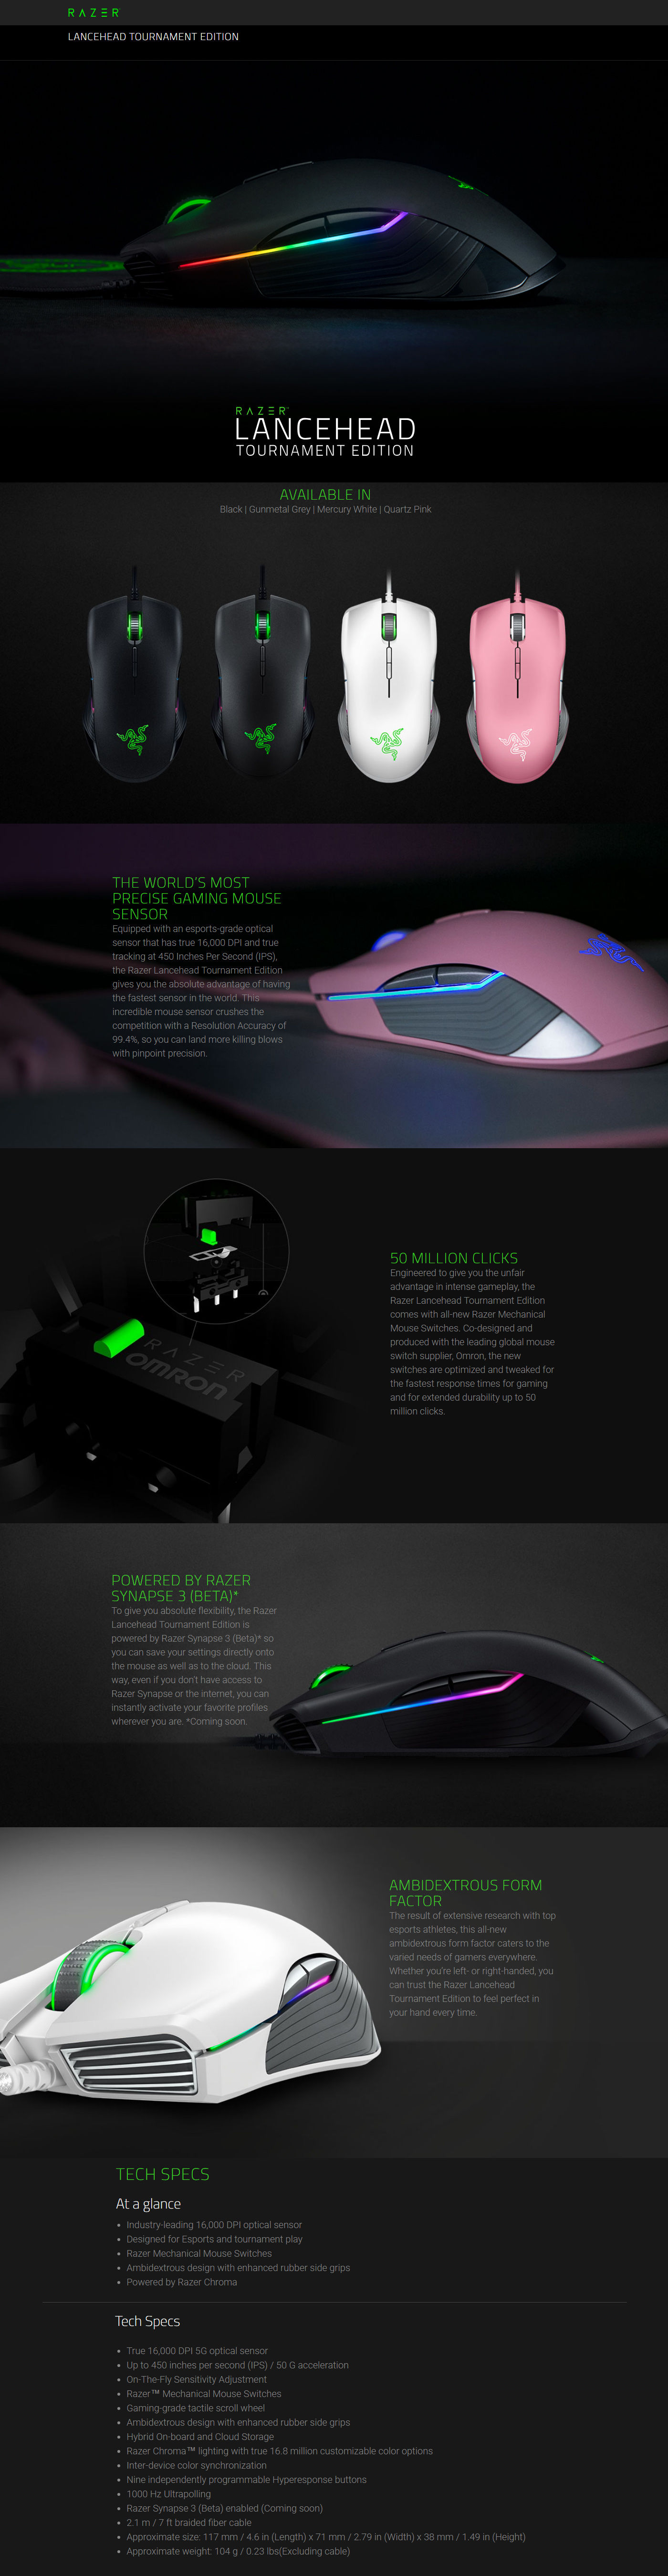  Buy Online Razer Lancehead Tournament Edition Quartz Edition Ambidextrous Gaming Mouse (RZ01-02130400-R3M1)